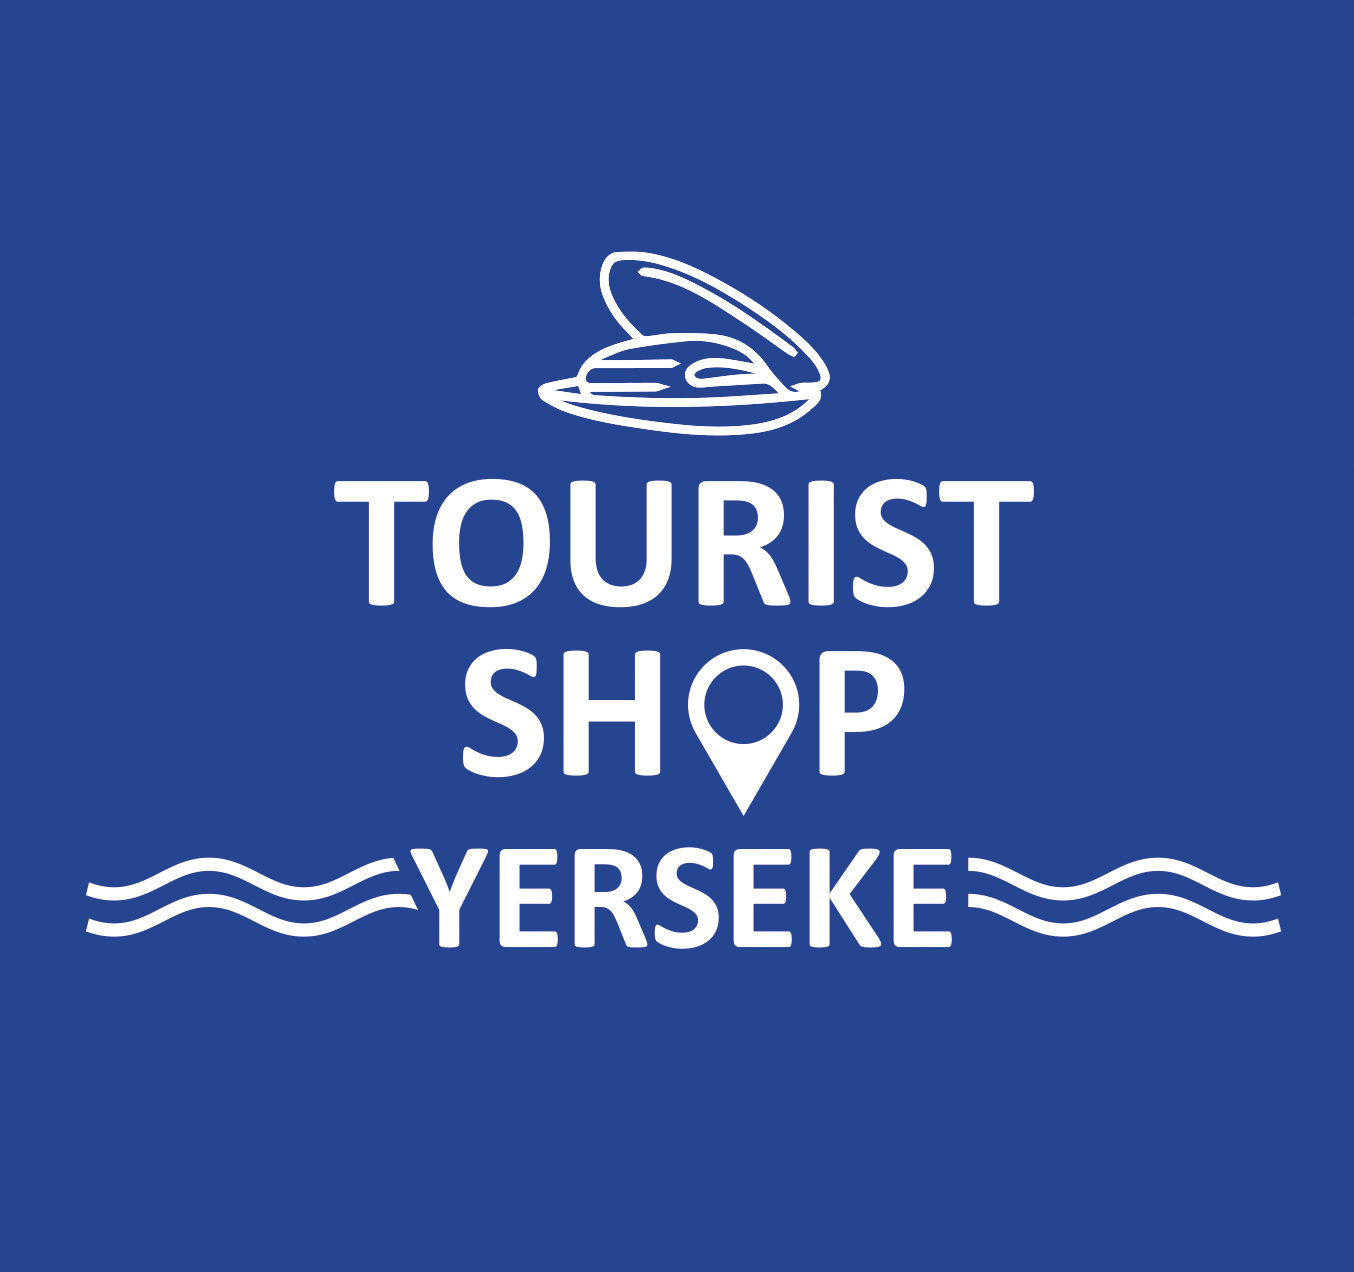 Tourist Shop Yerseke